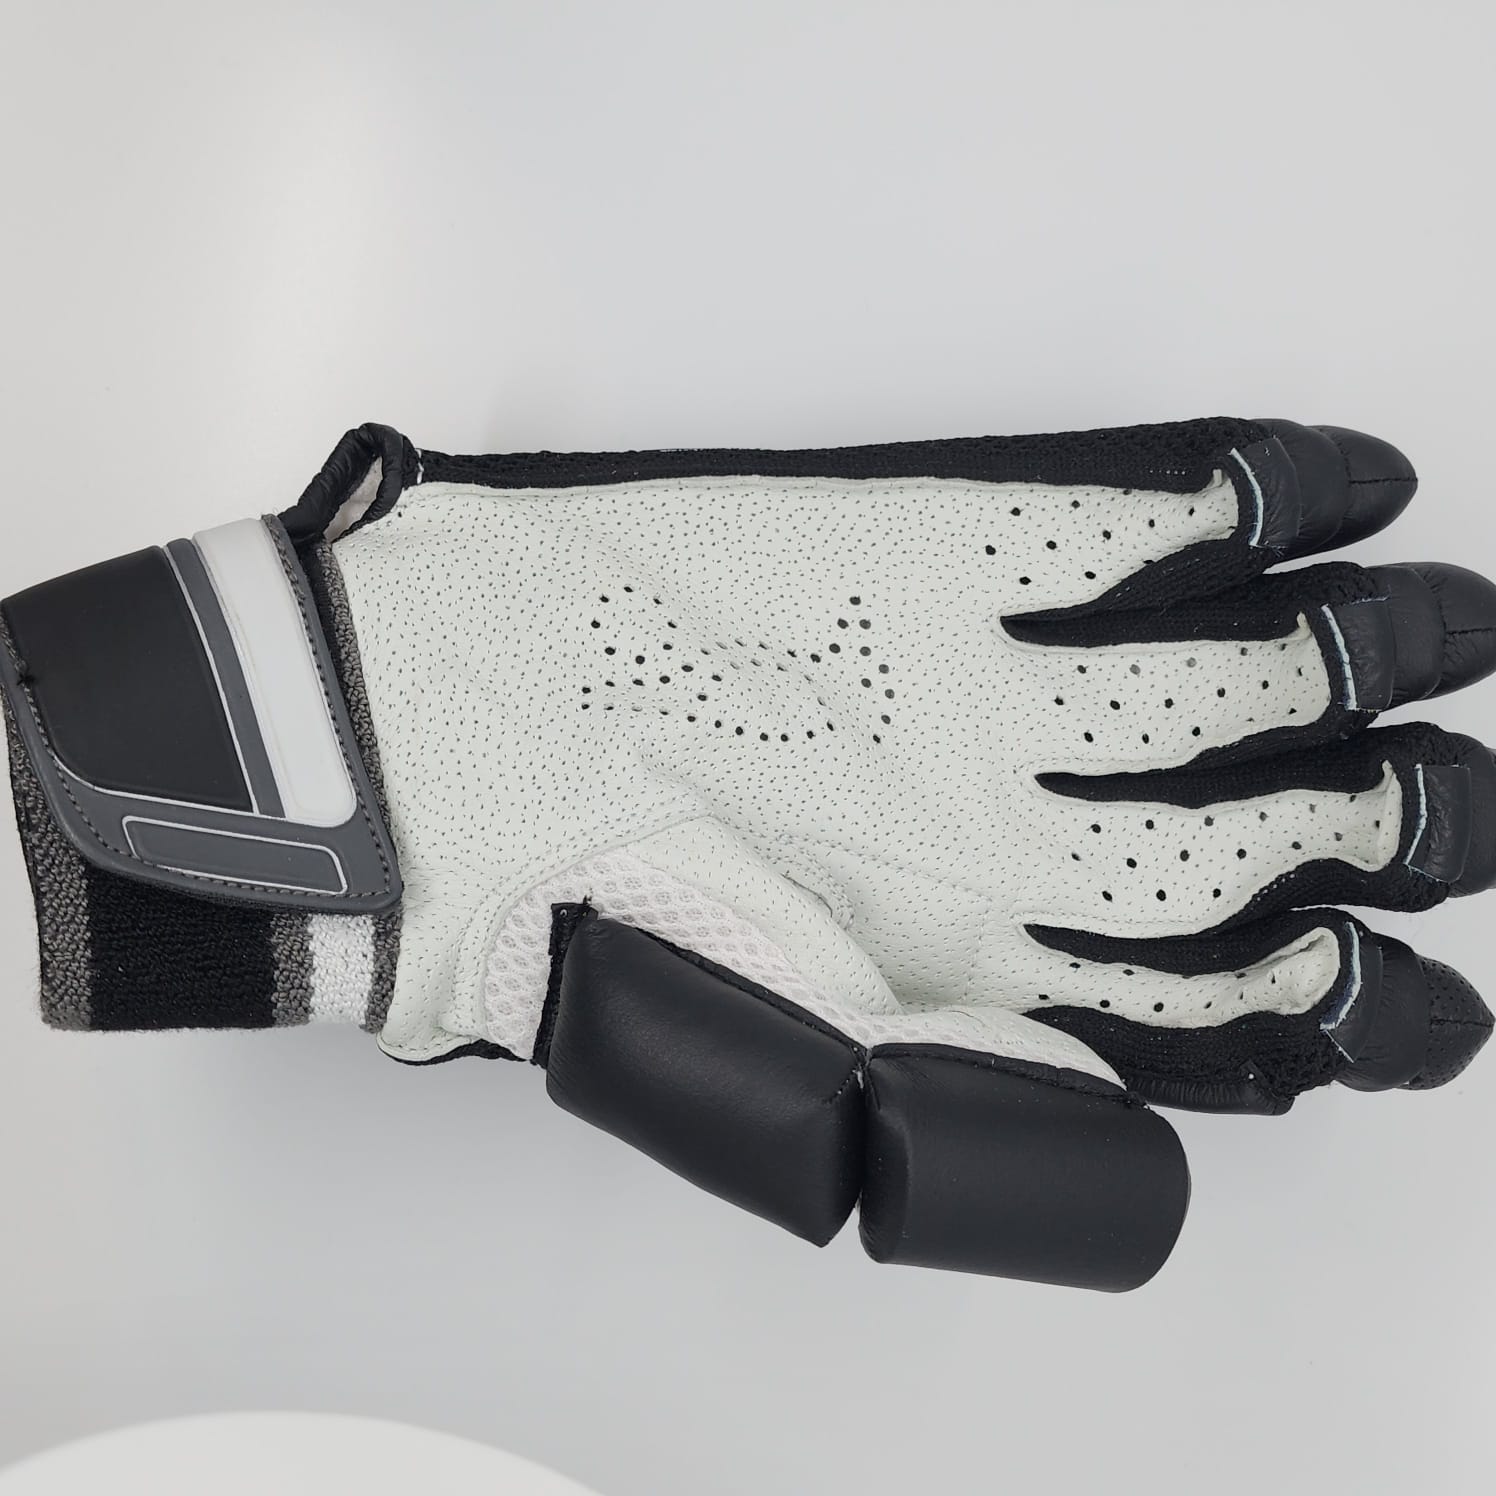 Kookaburra Pro Cricket Batting Gloves, Men Size Half White-Black - For Right Hand Players